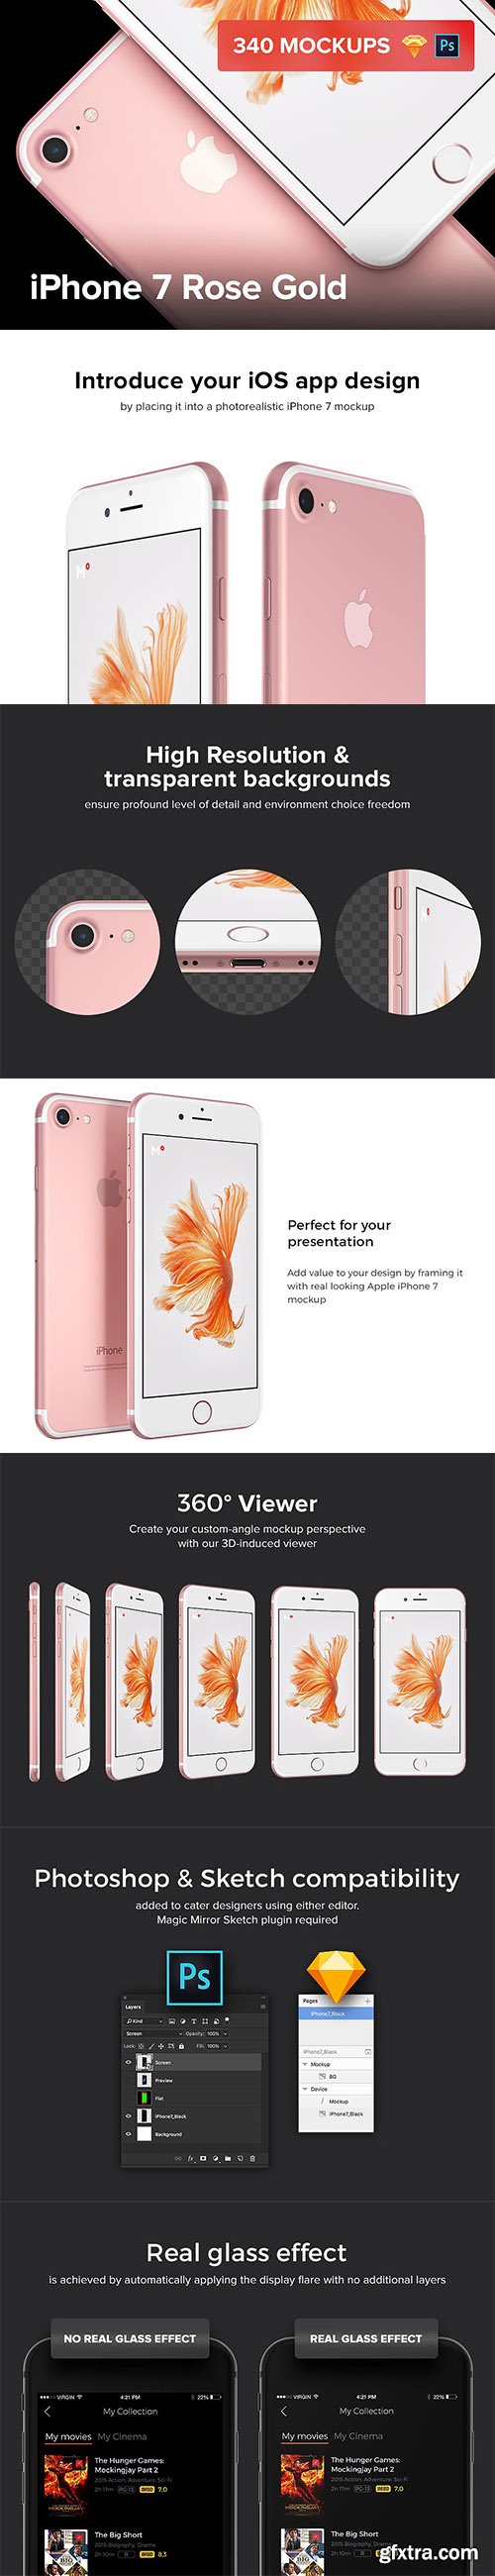 340 iPhone 7 Rose Gold mockups - CM 1247676